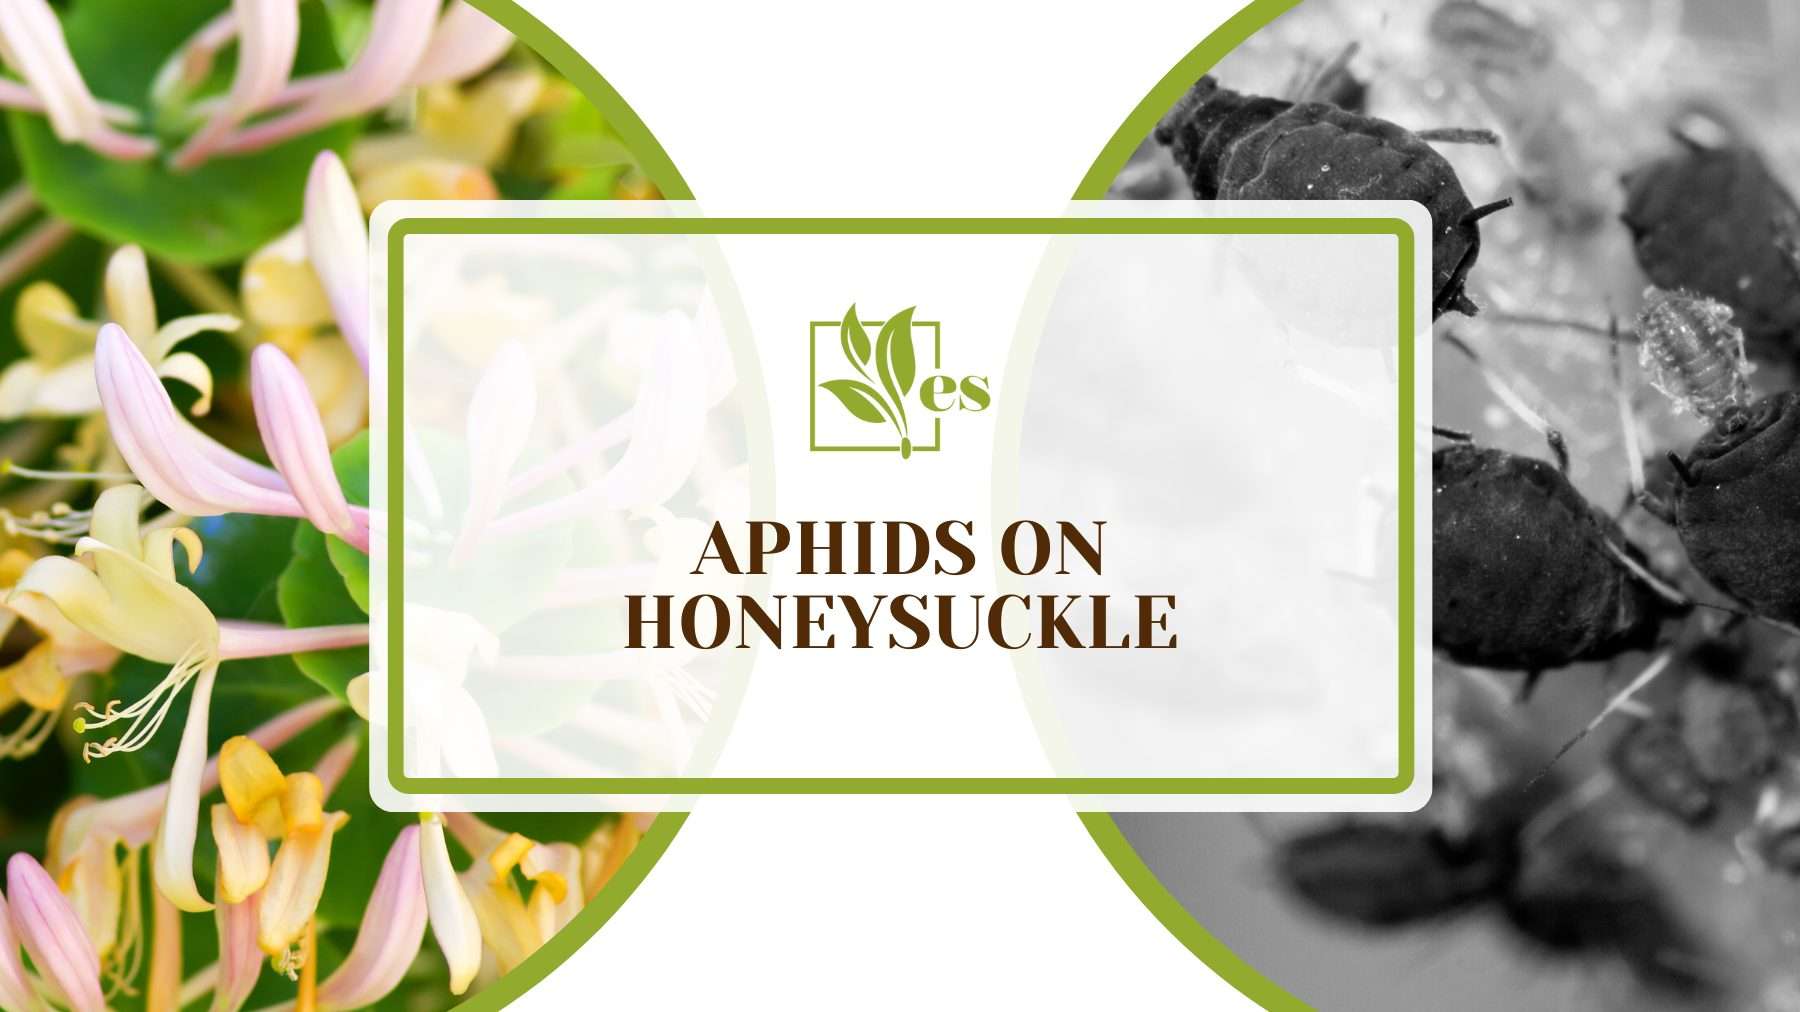 Aphids on Honeysuckle